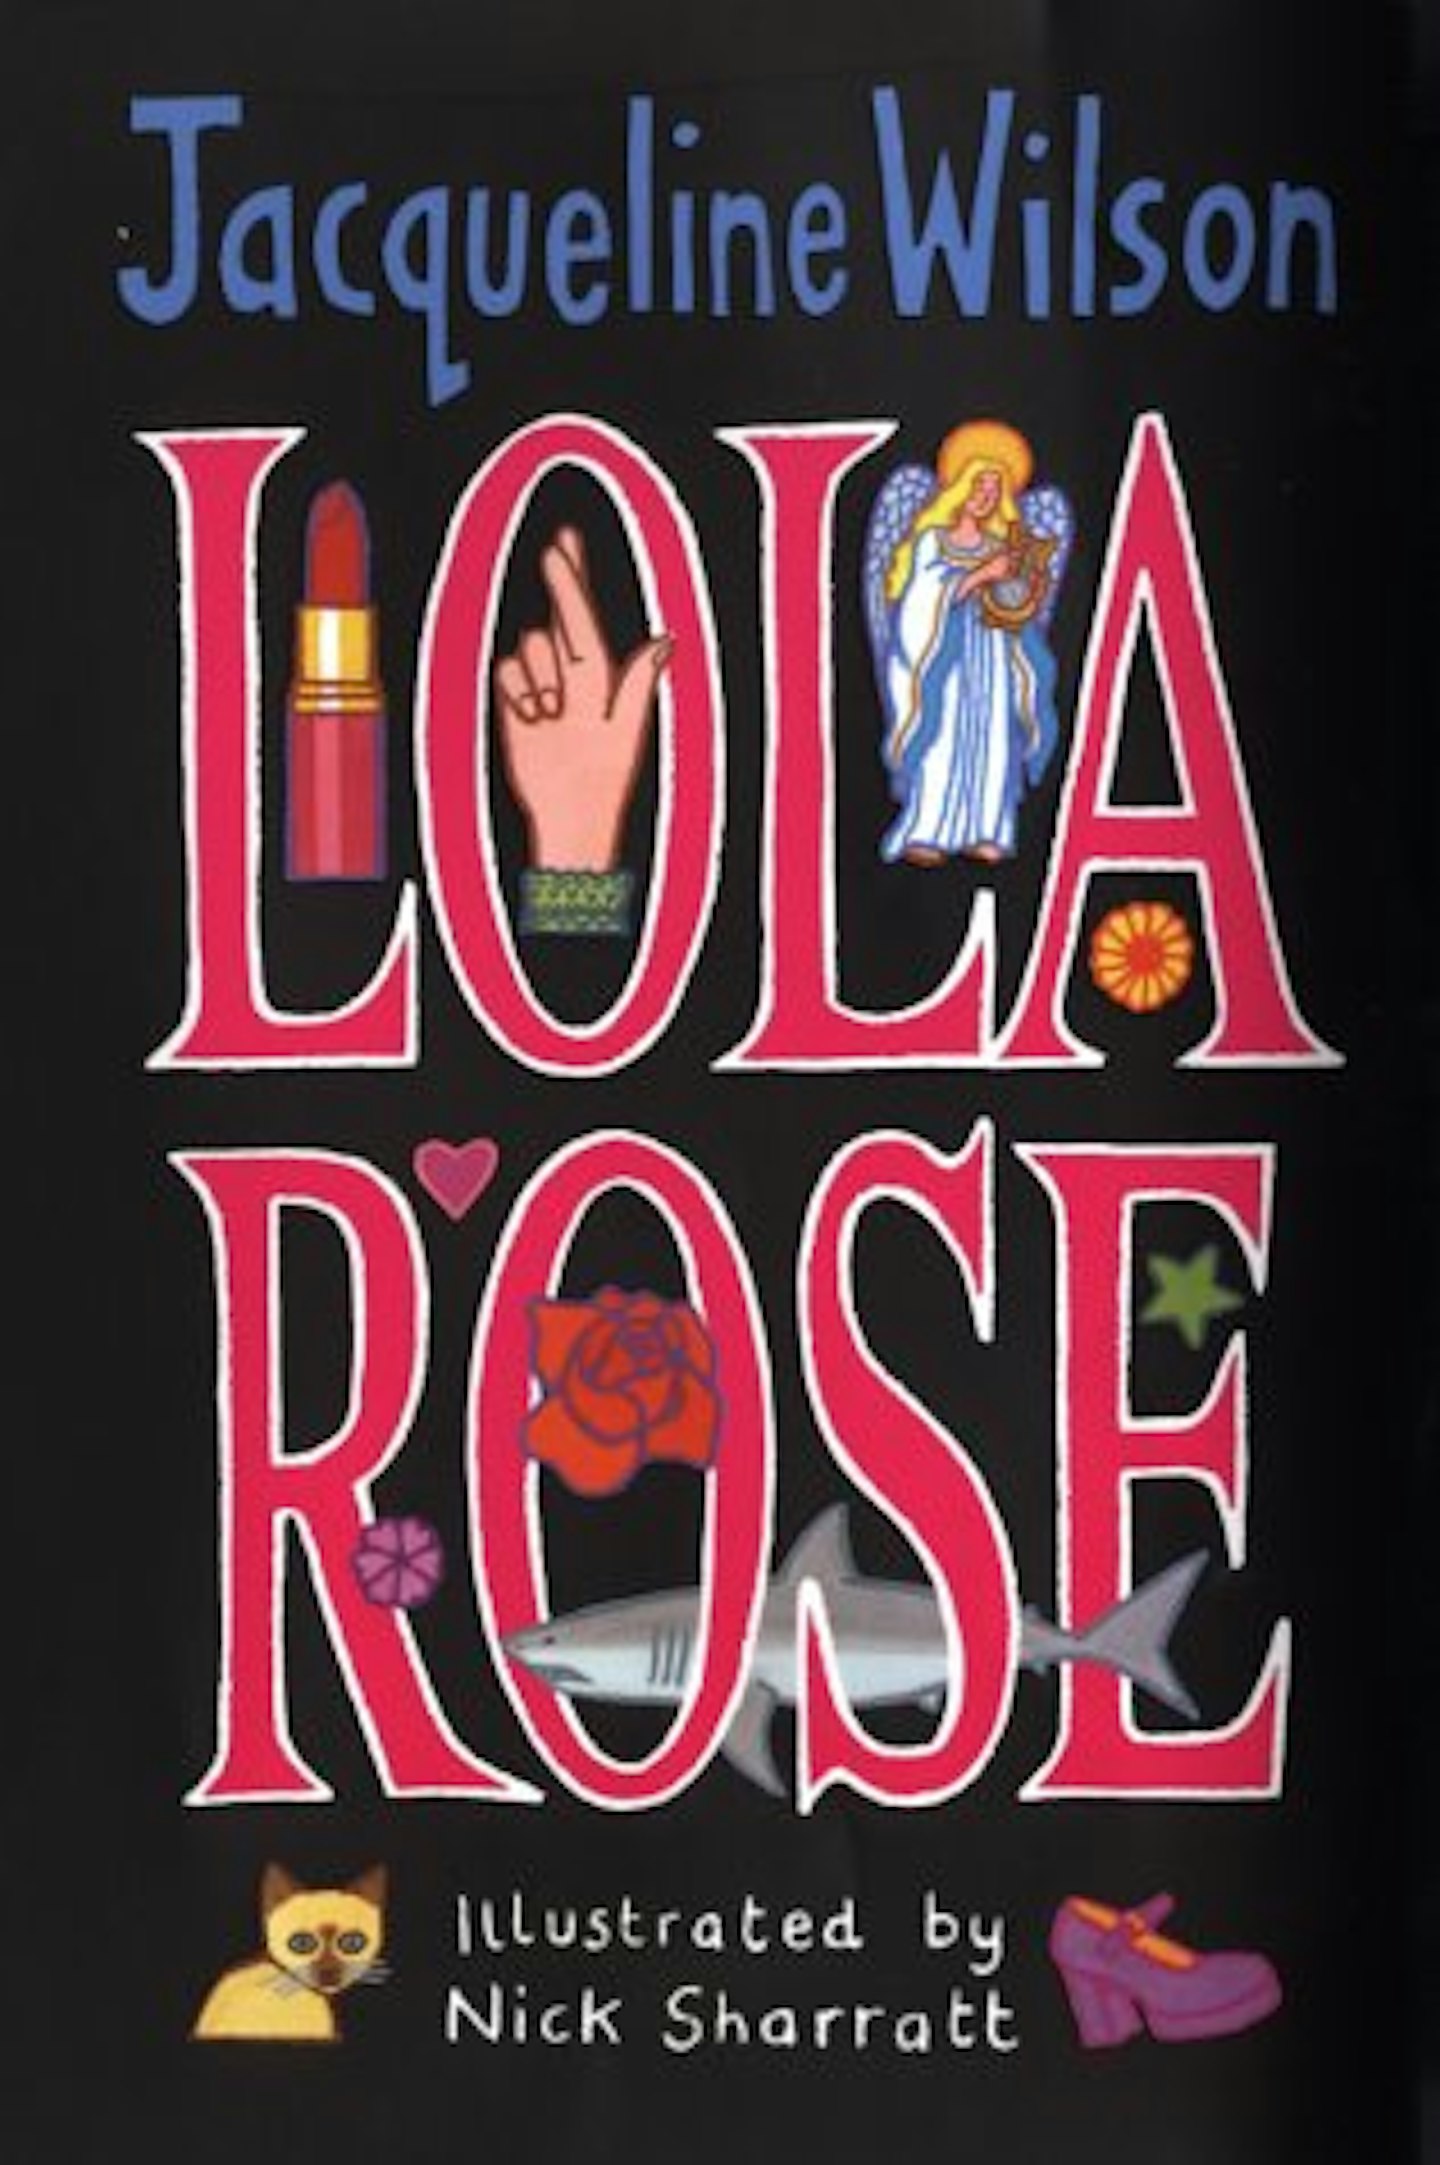 7. Lola Rose (2003)